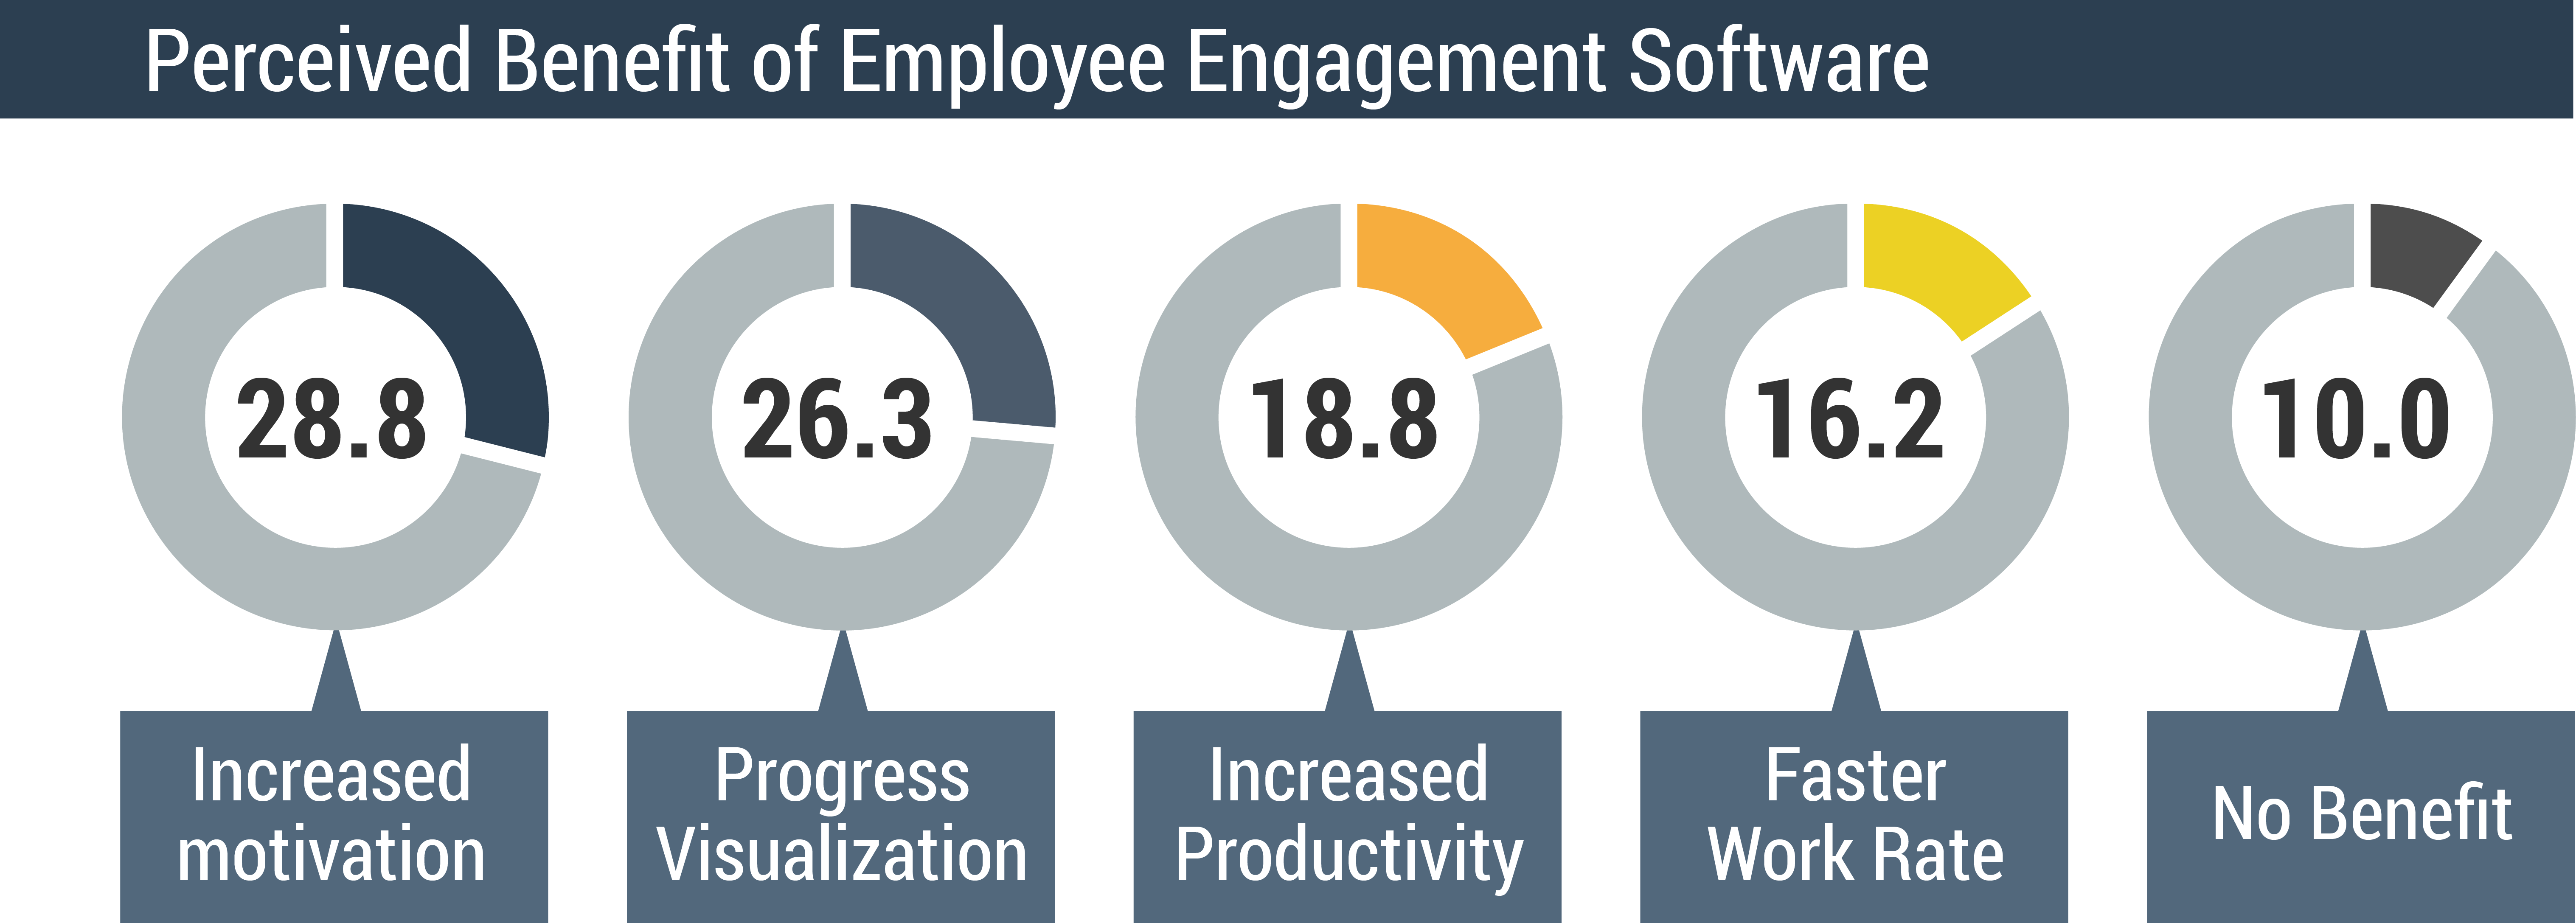 employee-engagement-chart6